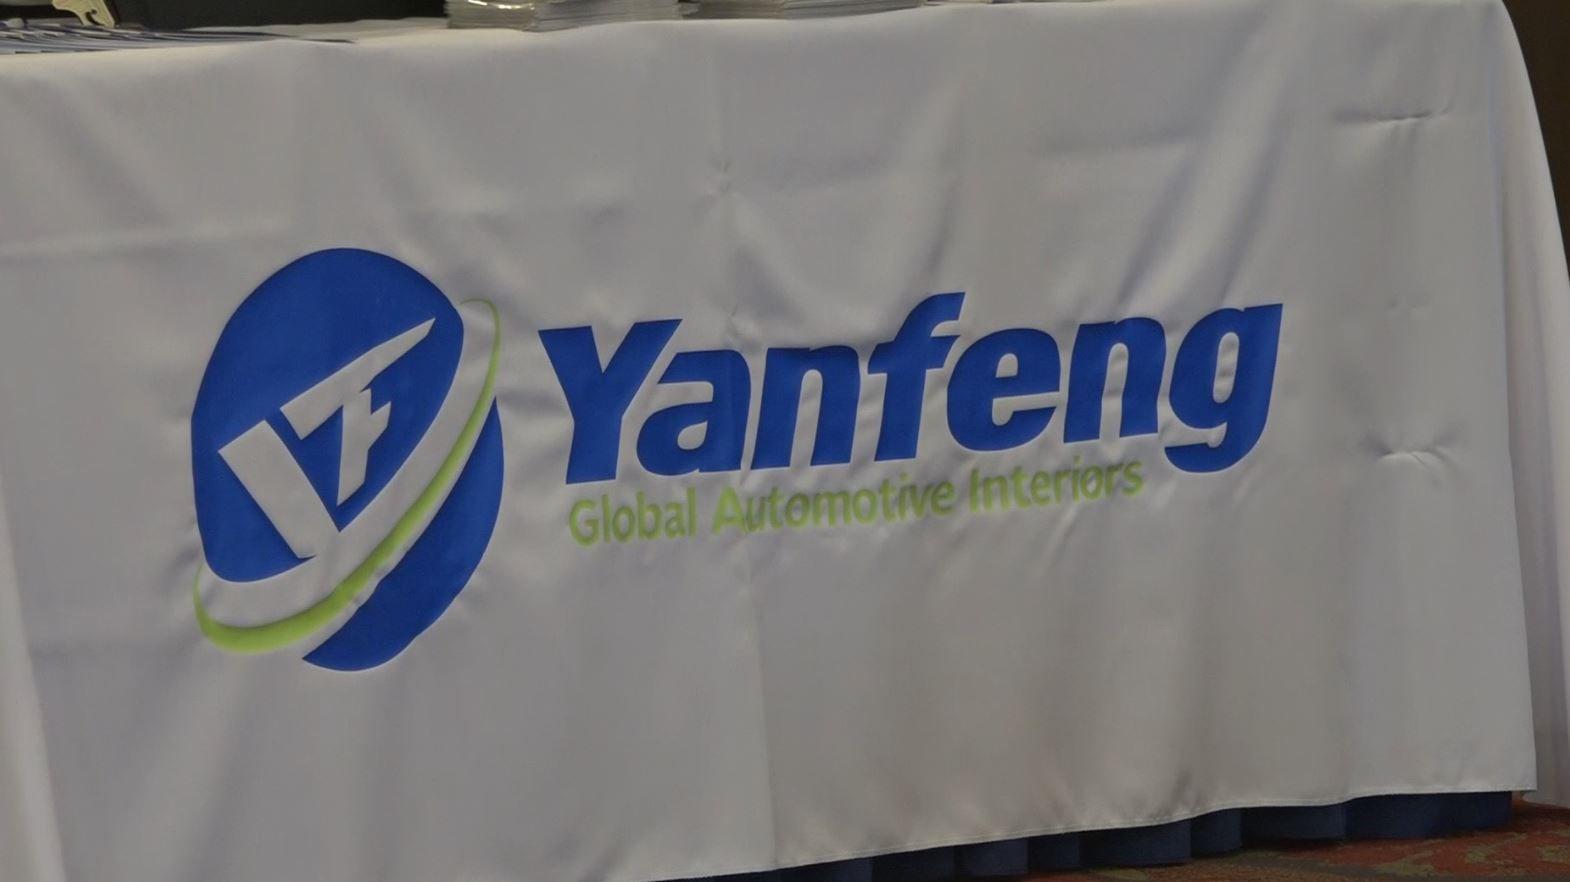 Yanfeng Logo - Car part supplier Yanfeng begins hiring for open positions